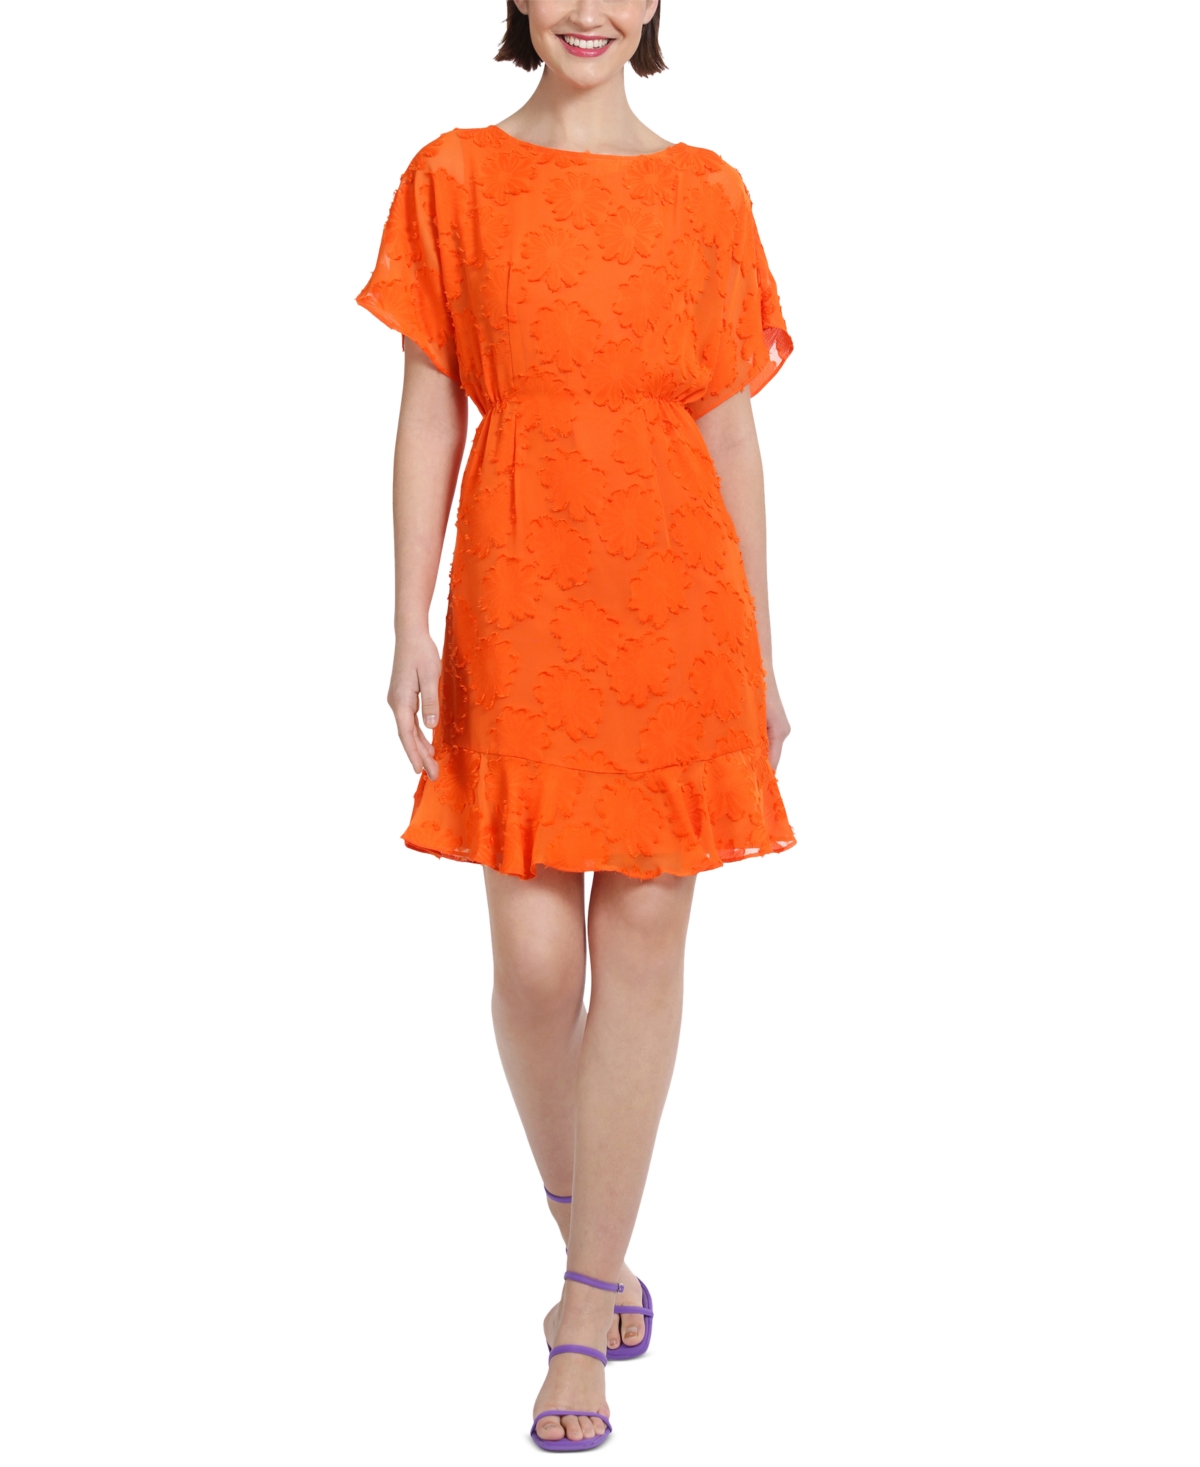 Women's Jewel-Neck Ruffle-Sleeve Burnout Dress - Bright Orange